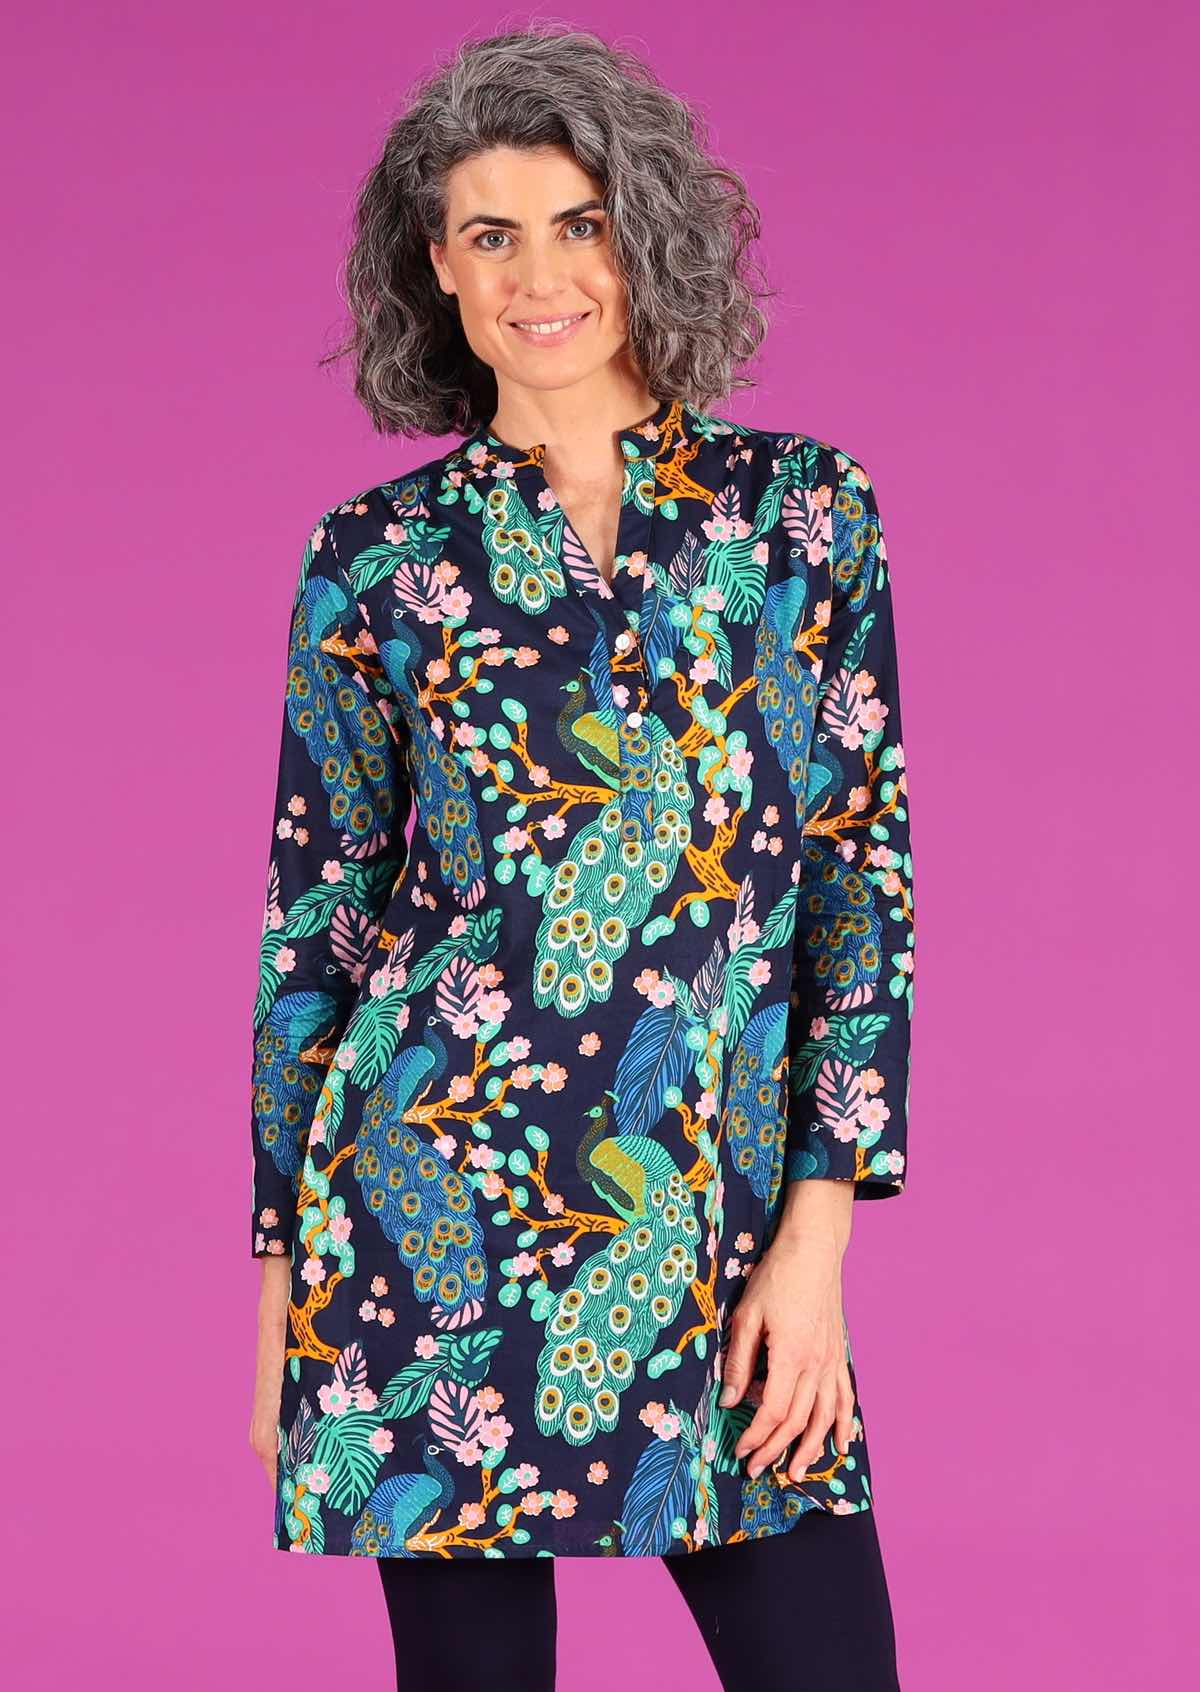 Torvi Tunic Peacock lightweight 100% cotton shirt dress with mandarin collar and buttons | Karma East Australia